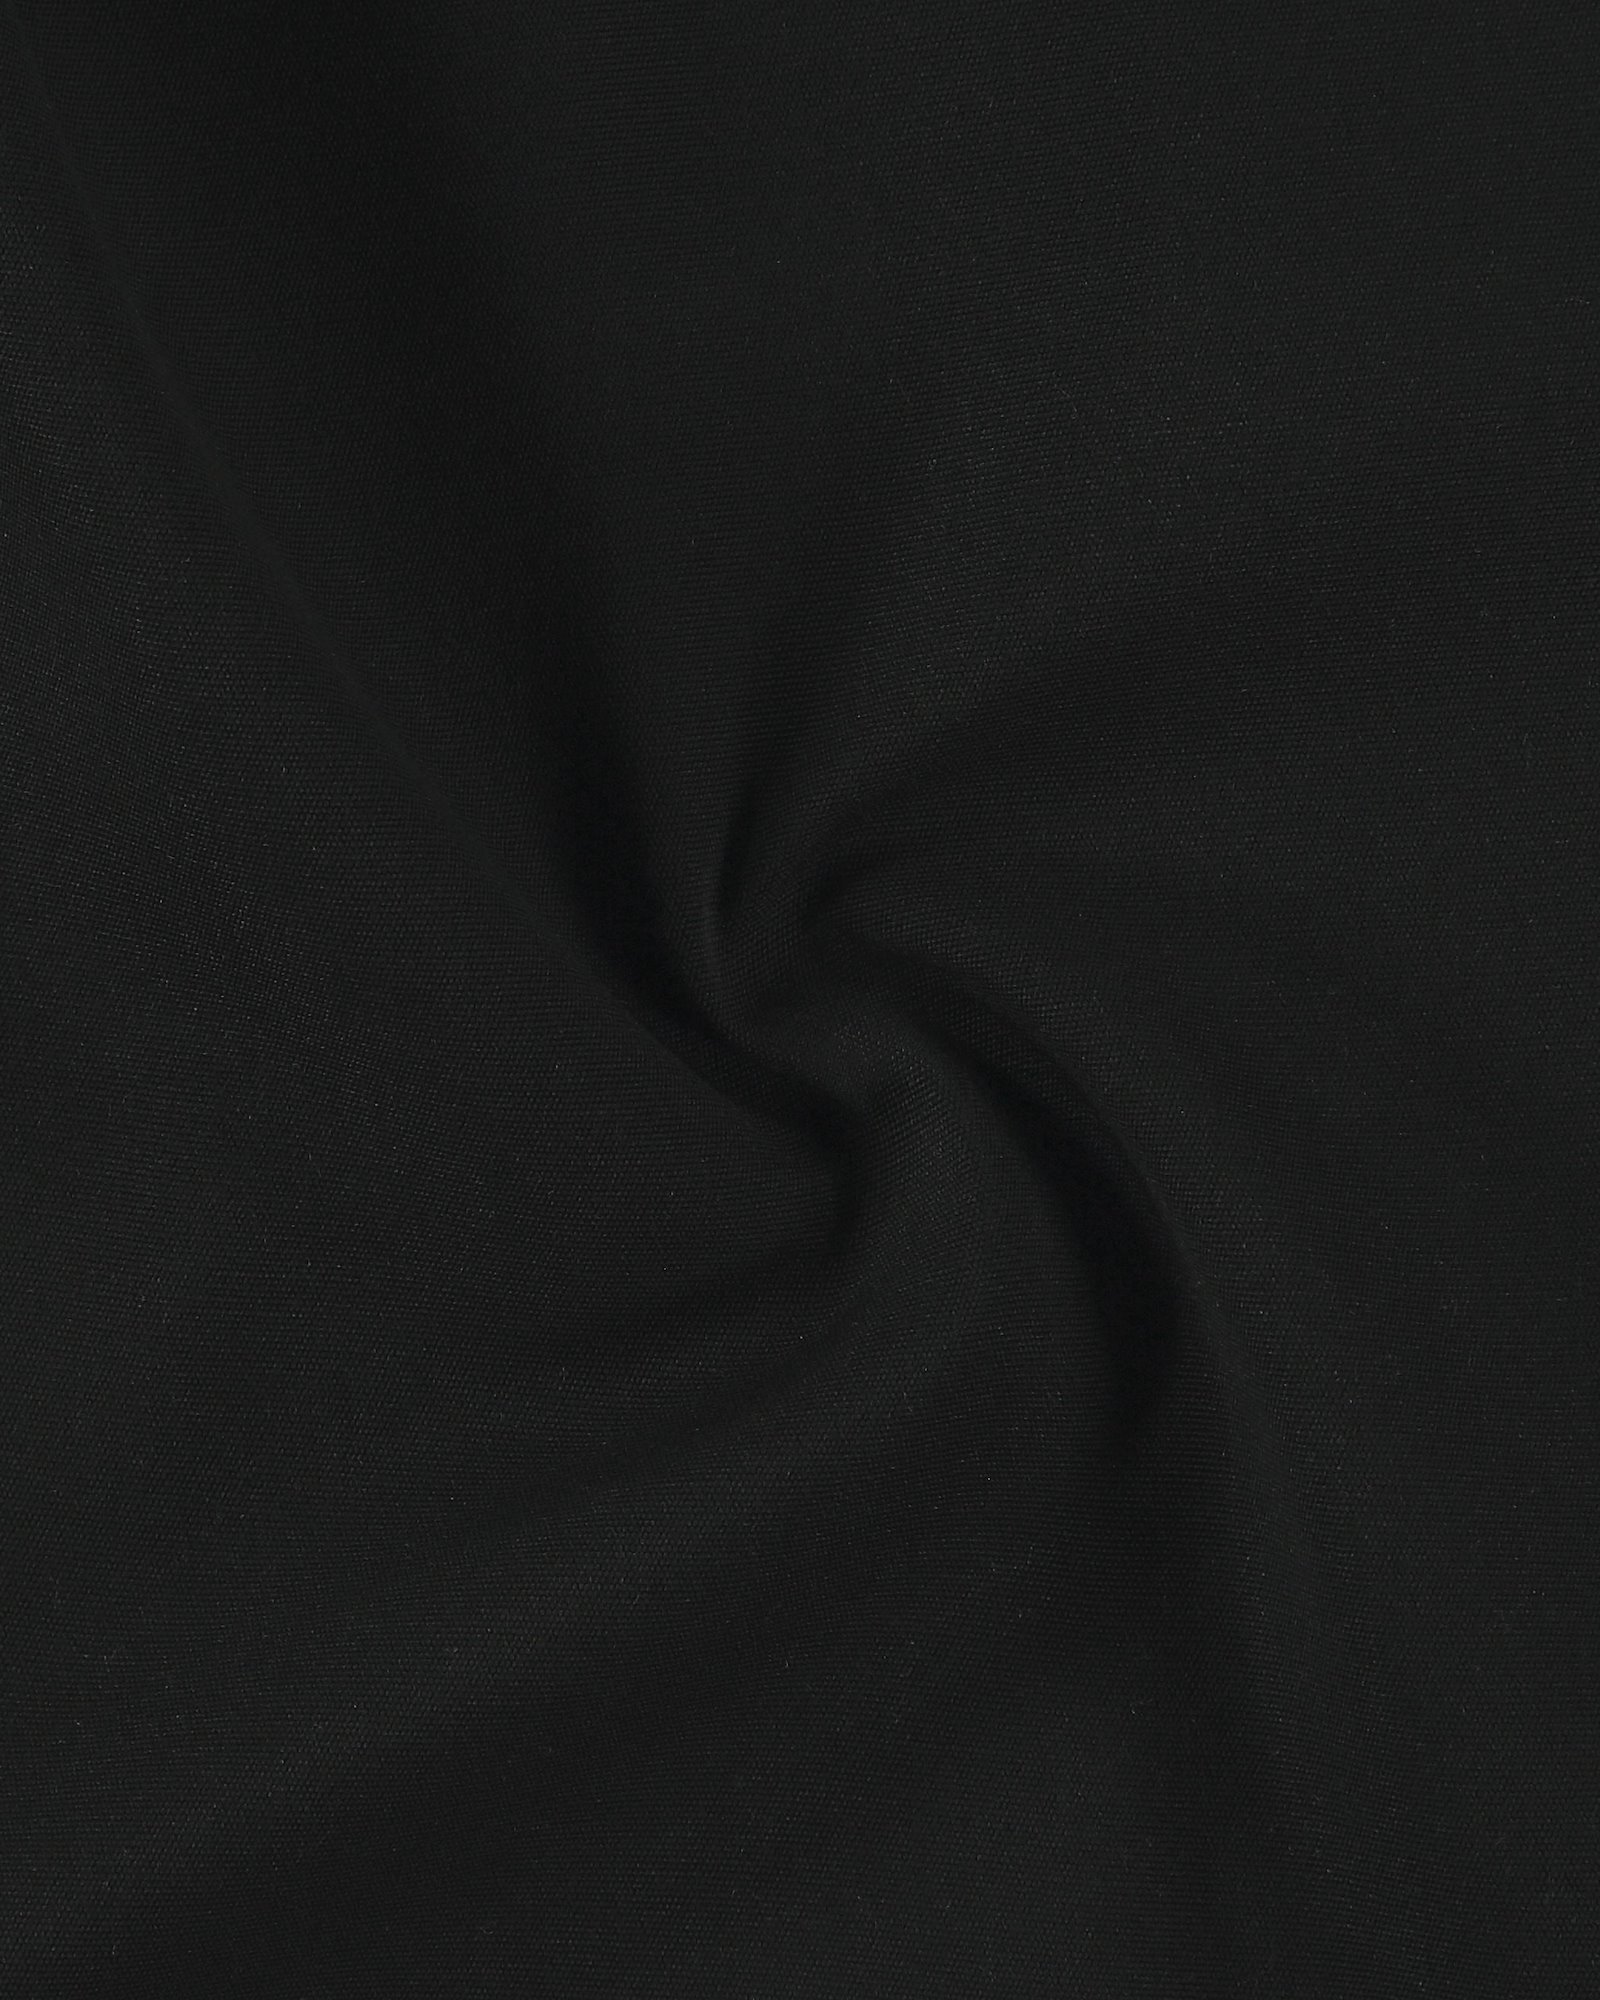 ALBEROSUN® outdoor fabric black 826248_pack